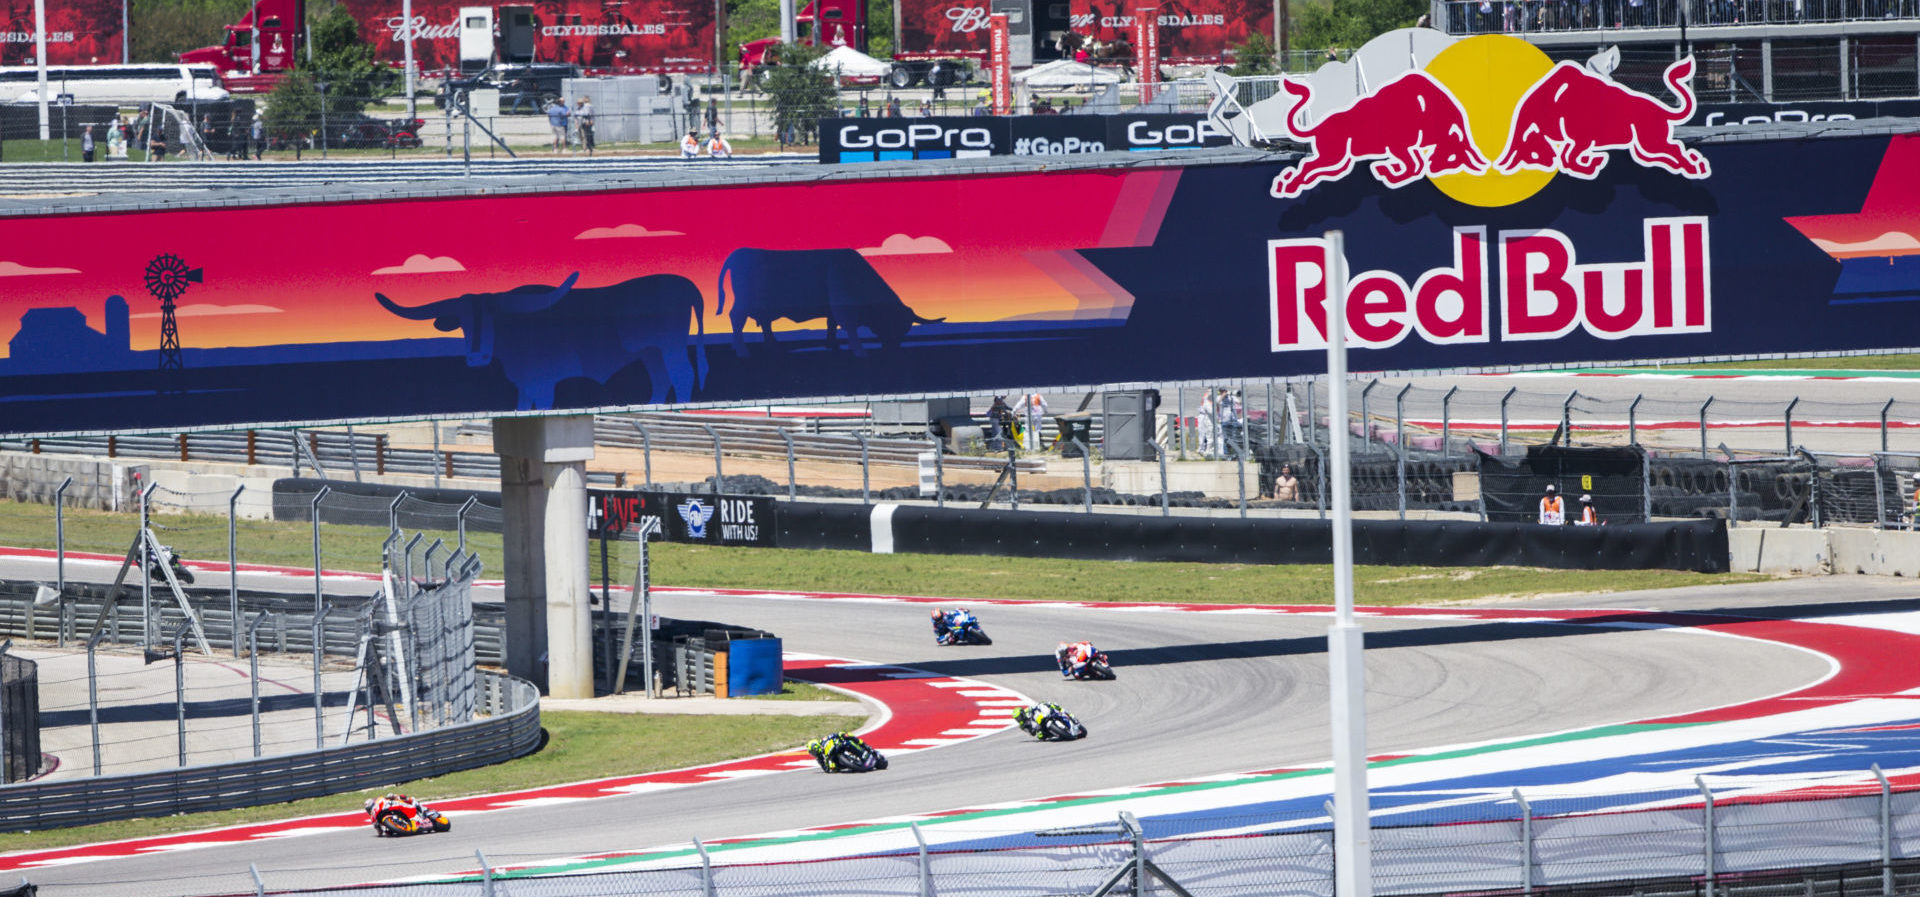 MotoGP Red Bull Grand Prix Returns to Circuit of The Americas